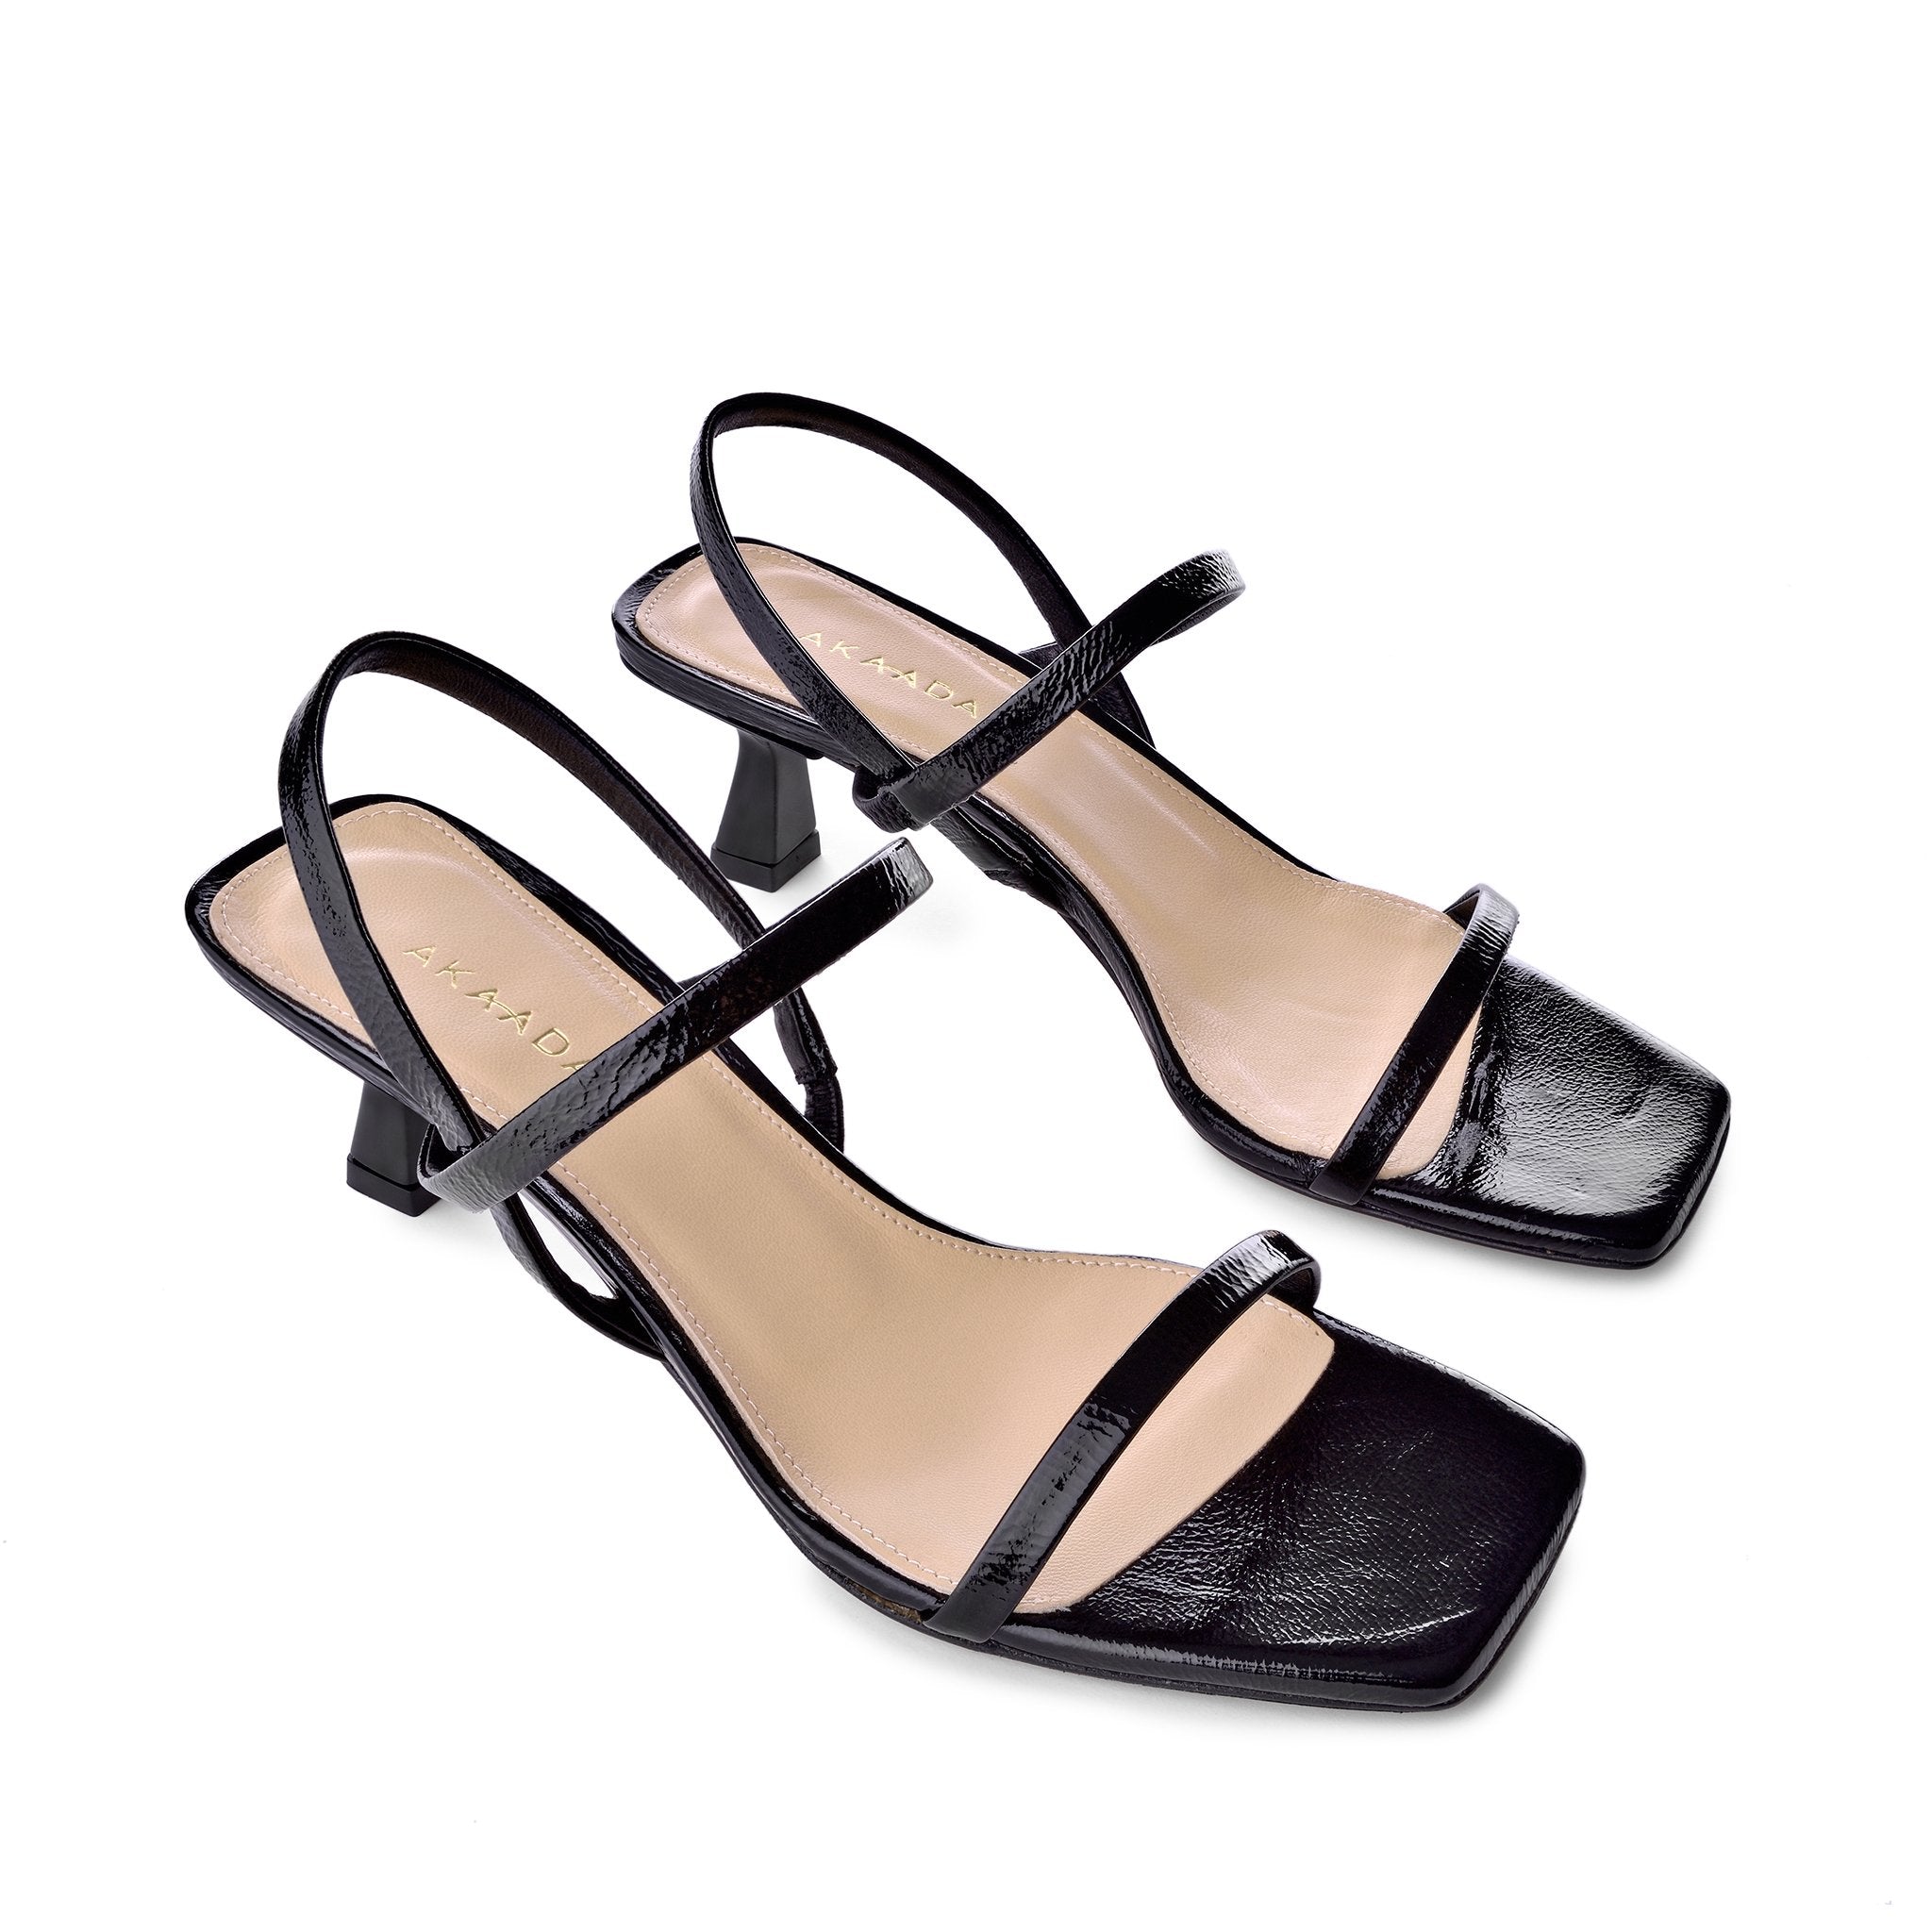 Miya Black Naplak Sandals 1408-01 - 5